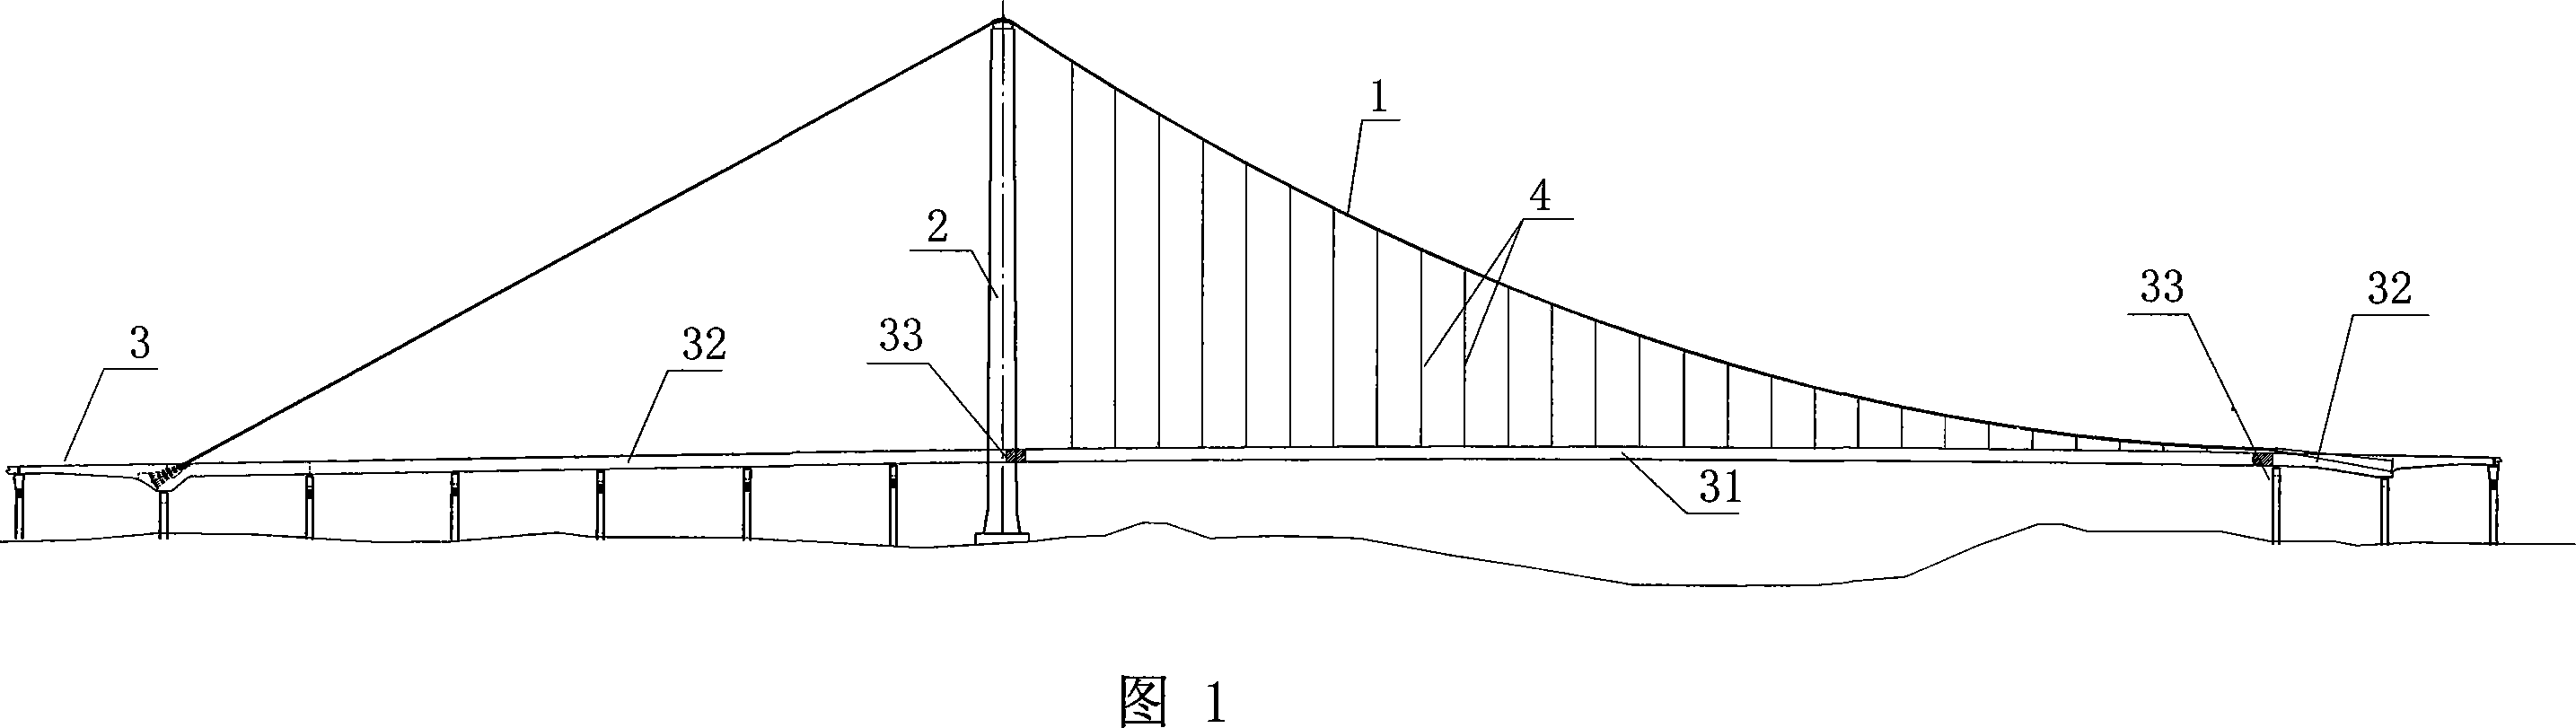 Single-tower self-anchored suspension bridge